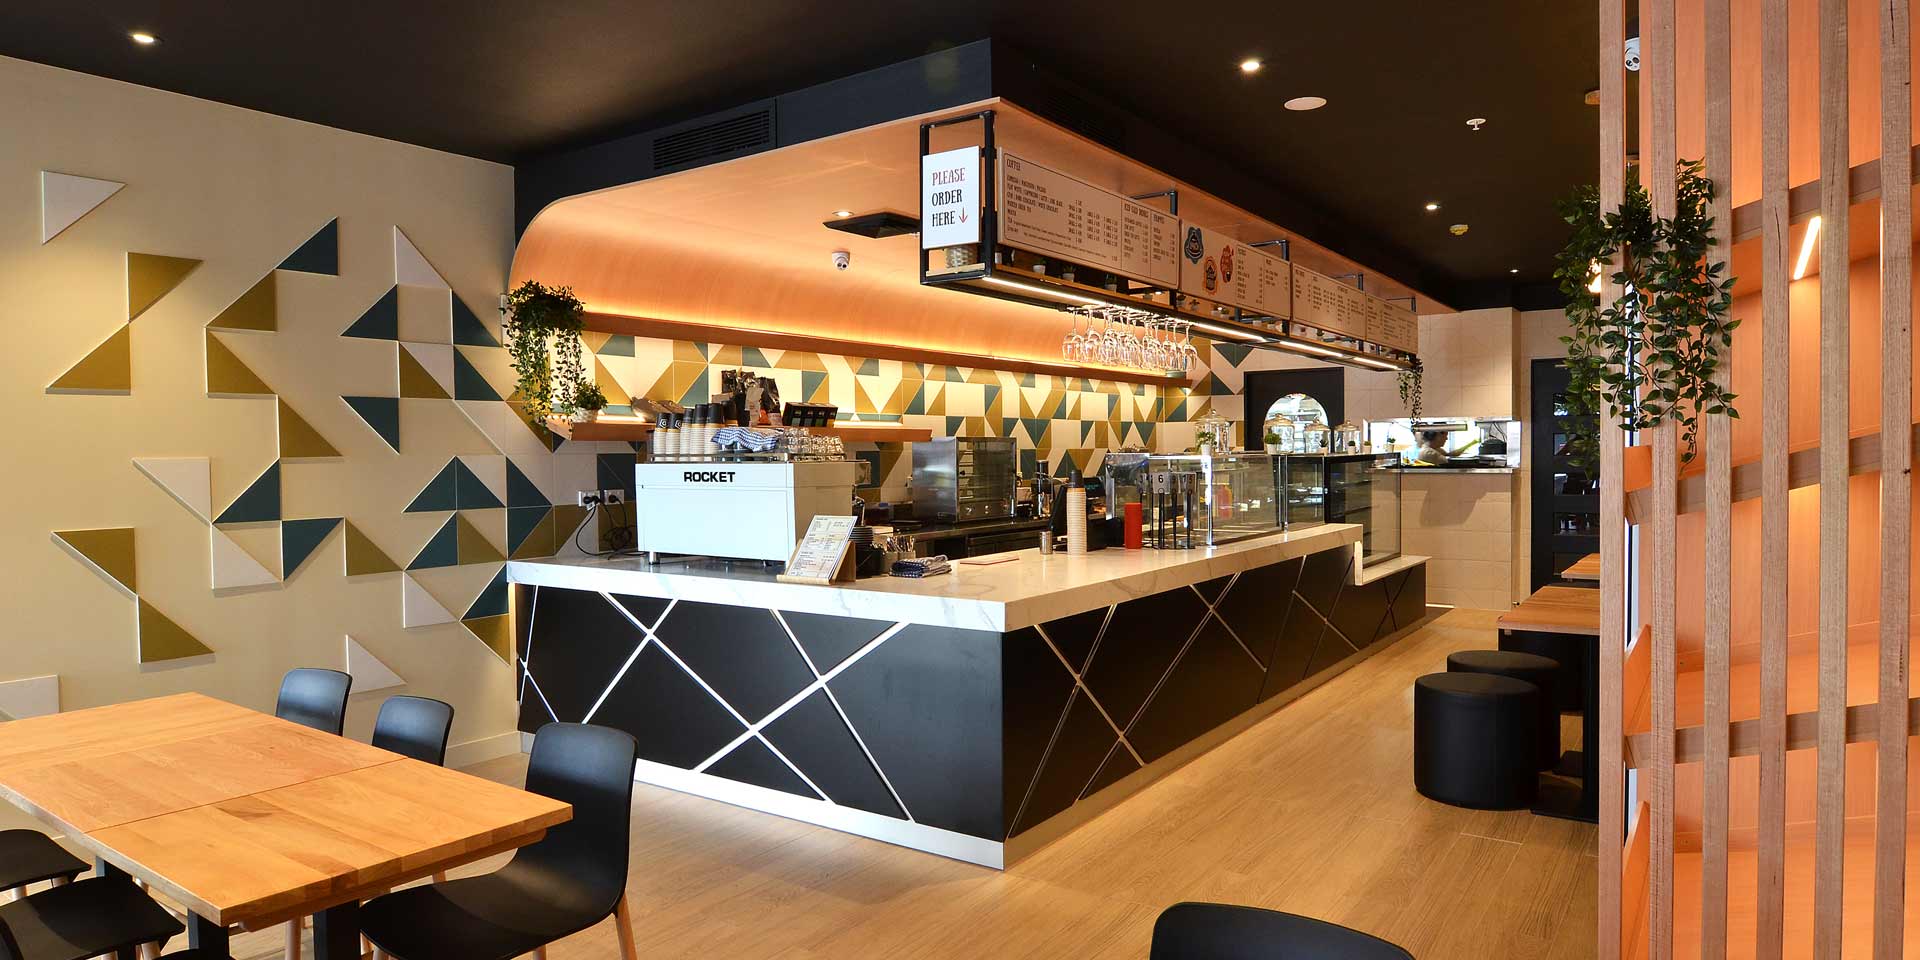 Interior Design for B5 Cafe in Narraweena